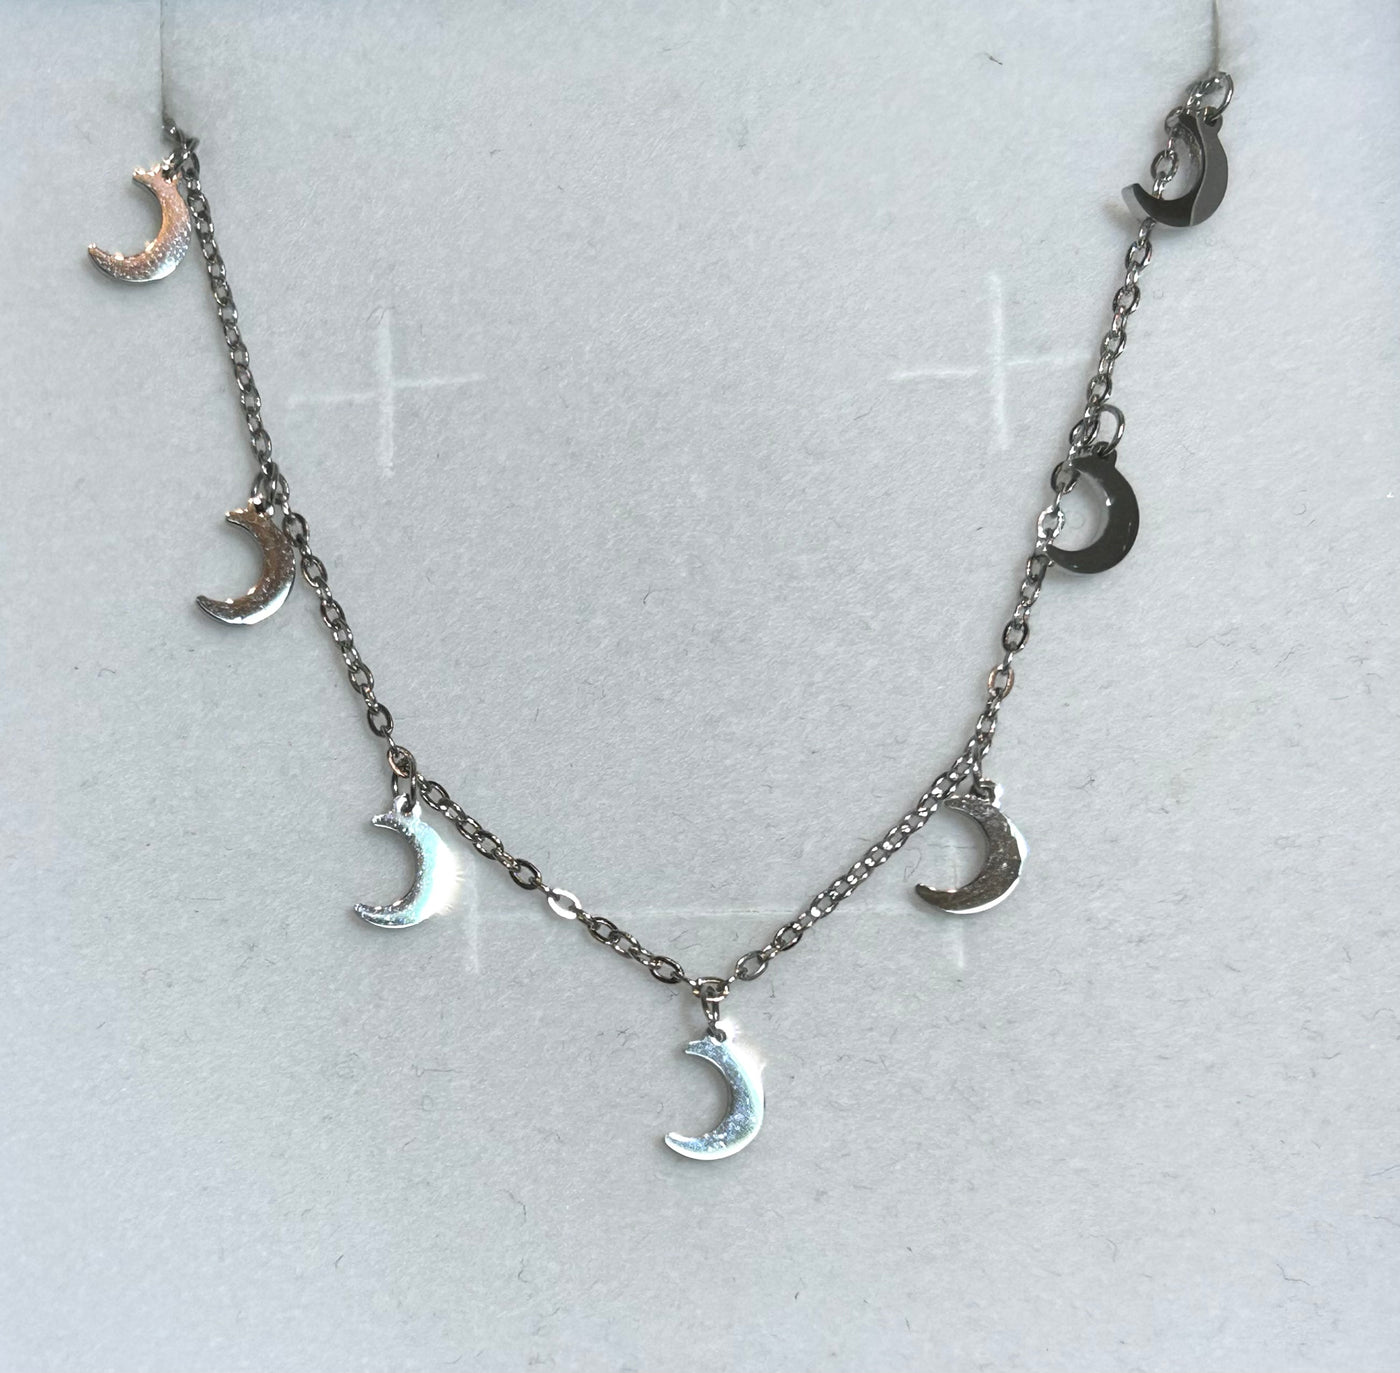 Lunar necklace